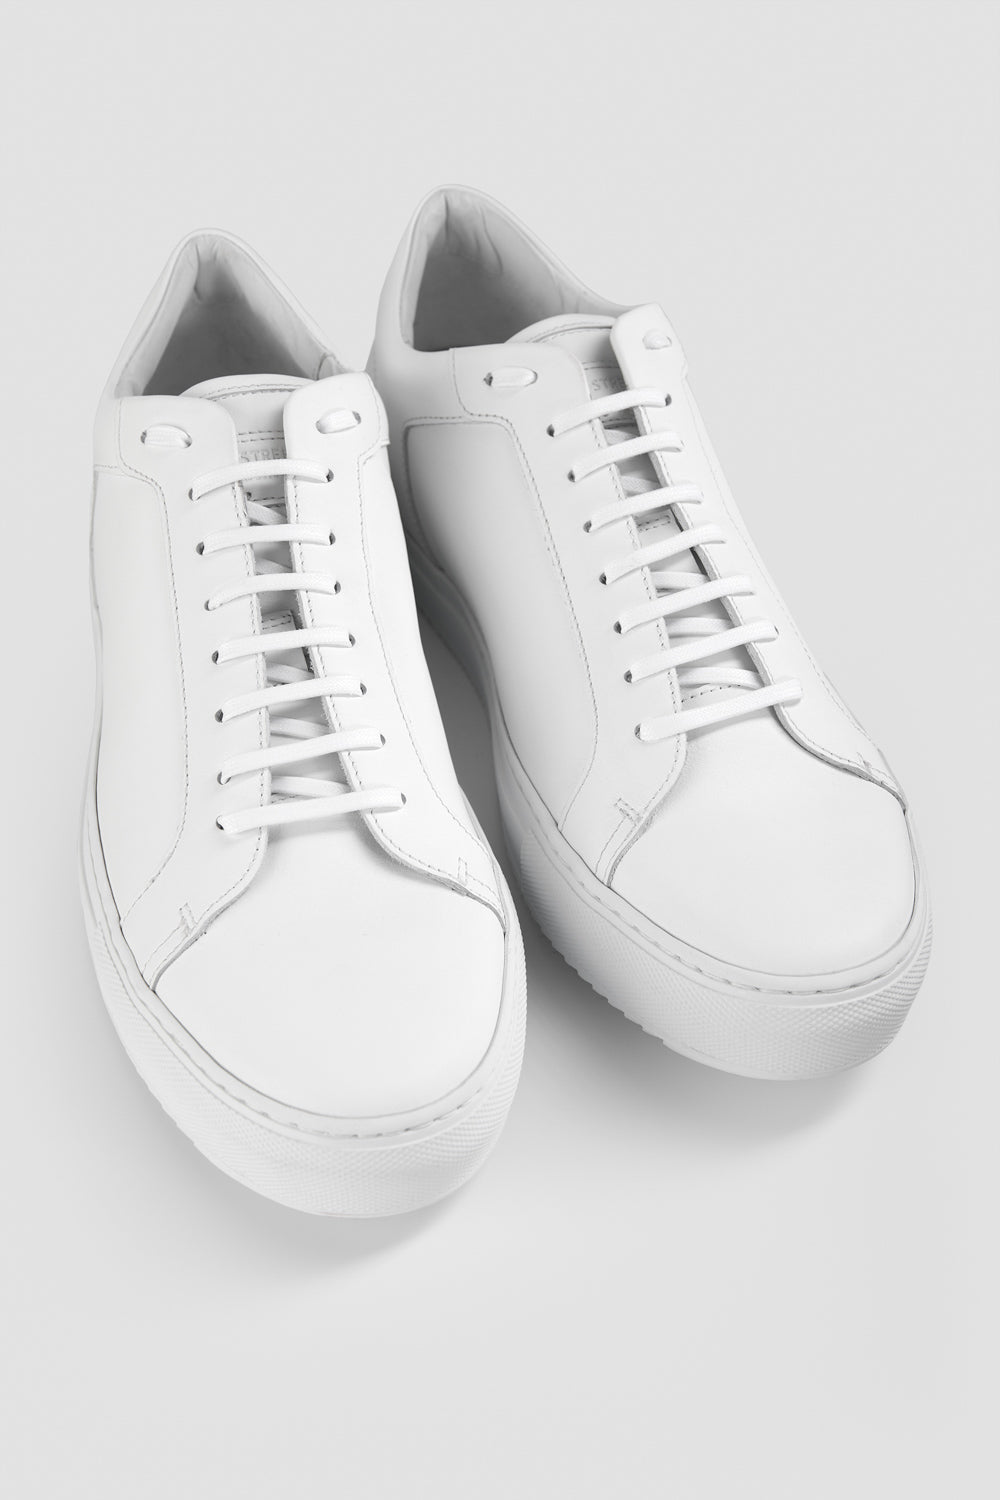 MO - LUV Beverly Hills Hours White Sneaker - Men / 11  White sneakers women,  White sneaker, White sneakers men